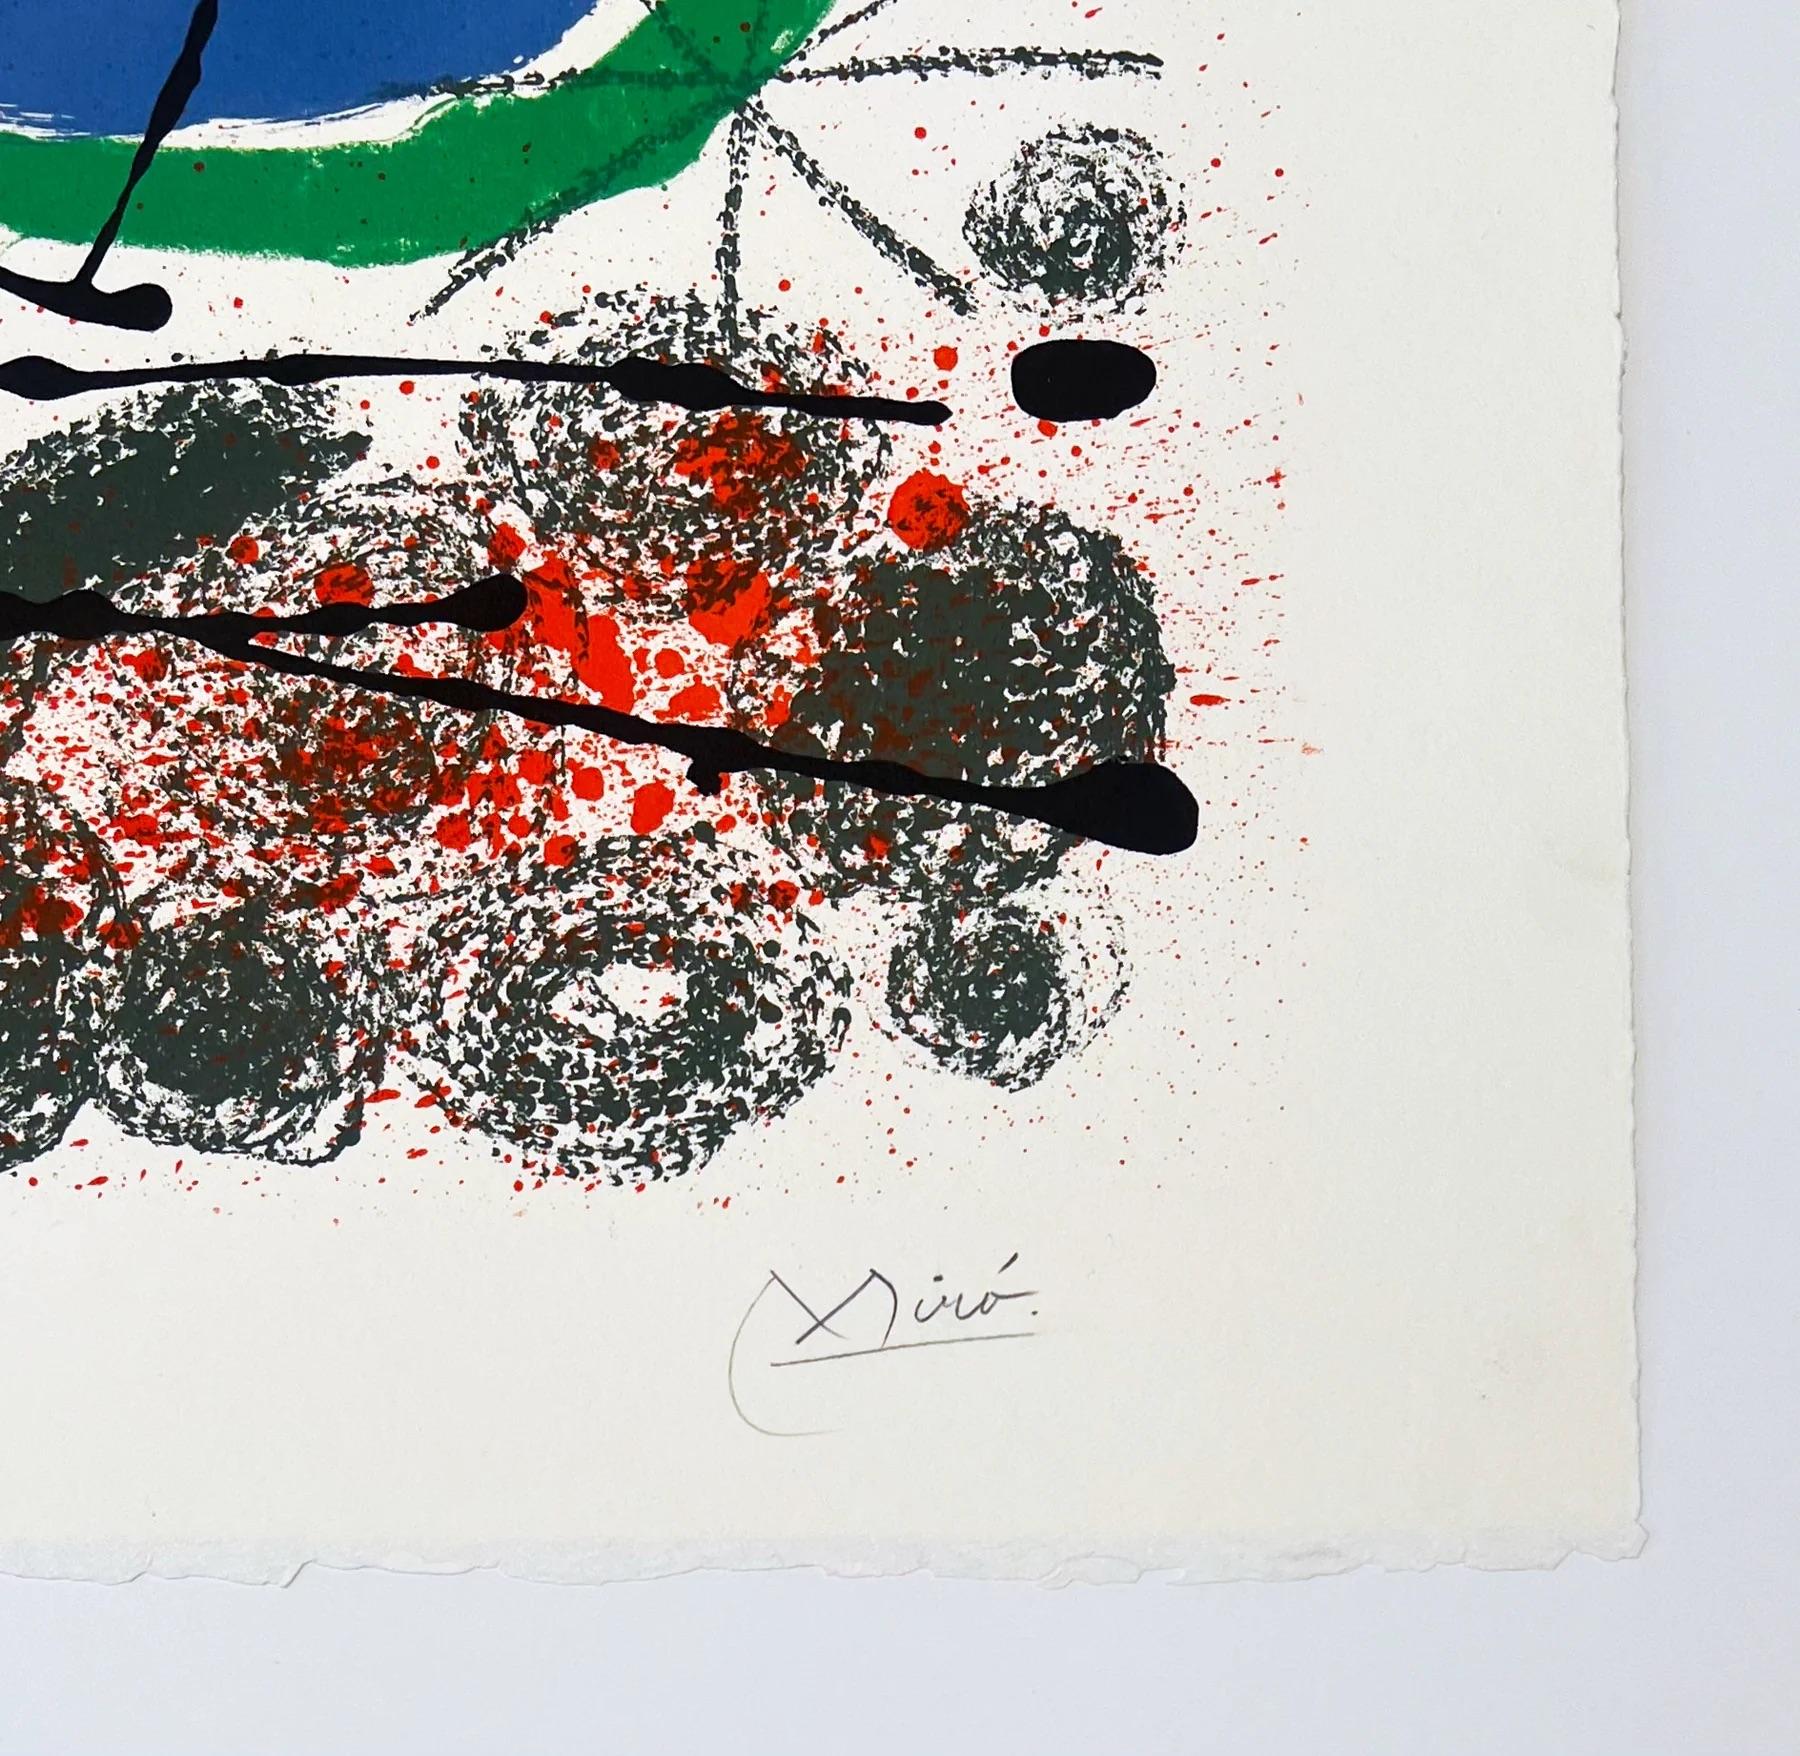 Kartons (Abstrakt), Print, von Joan Miró